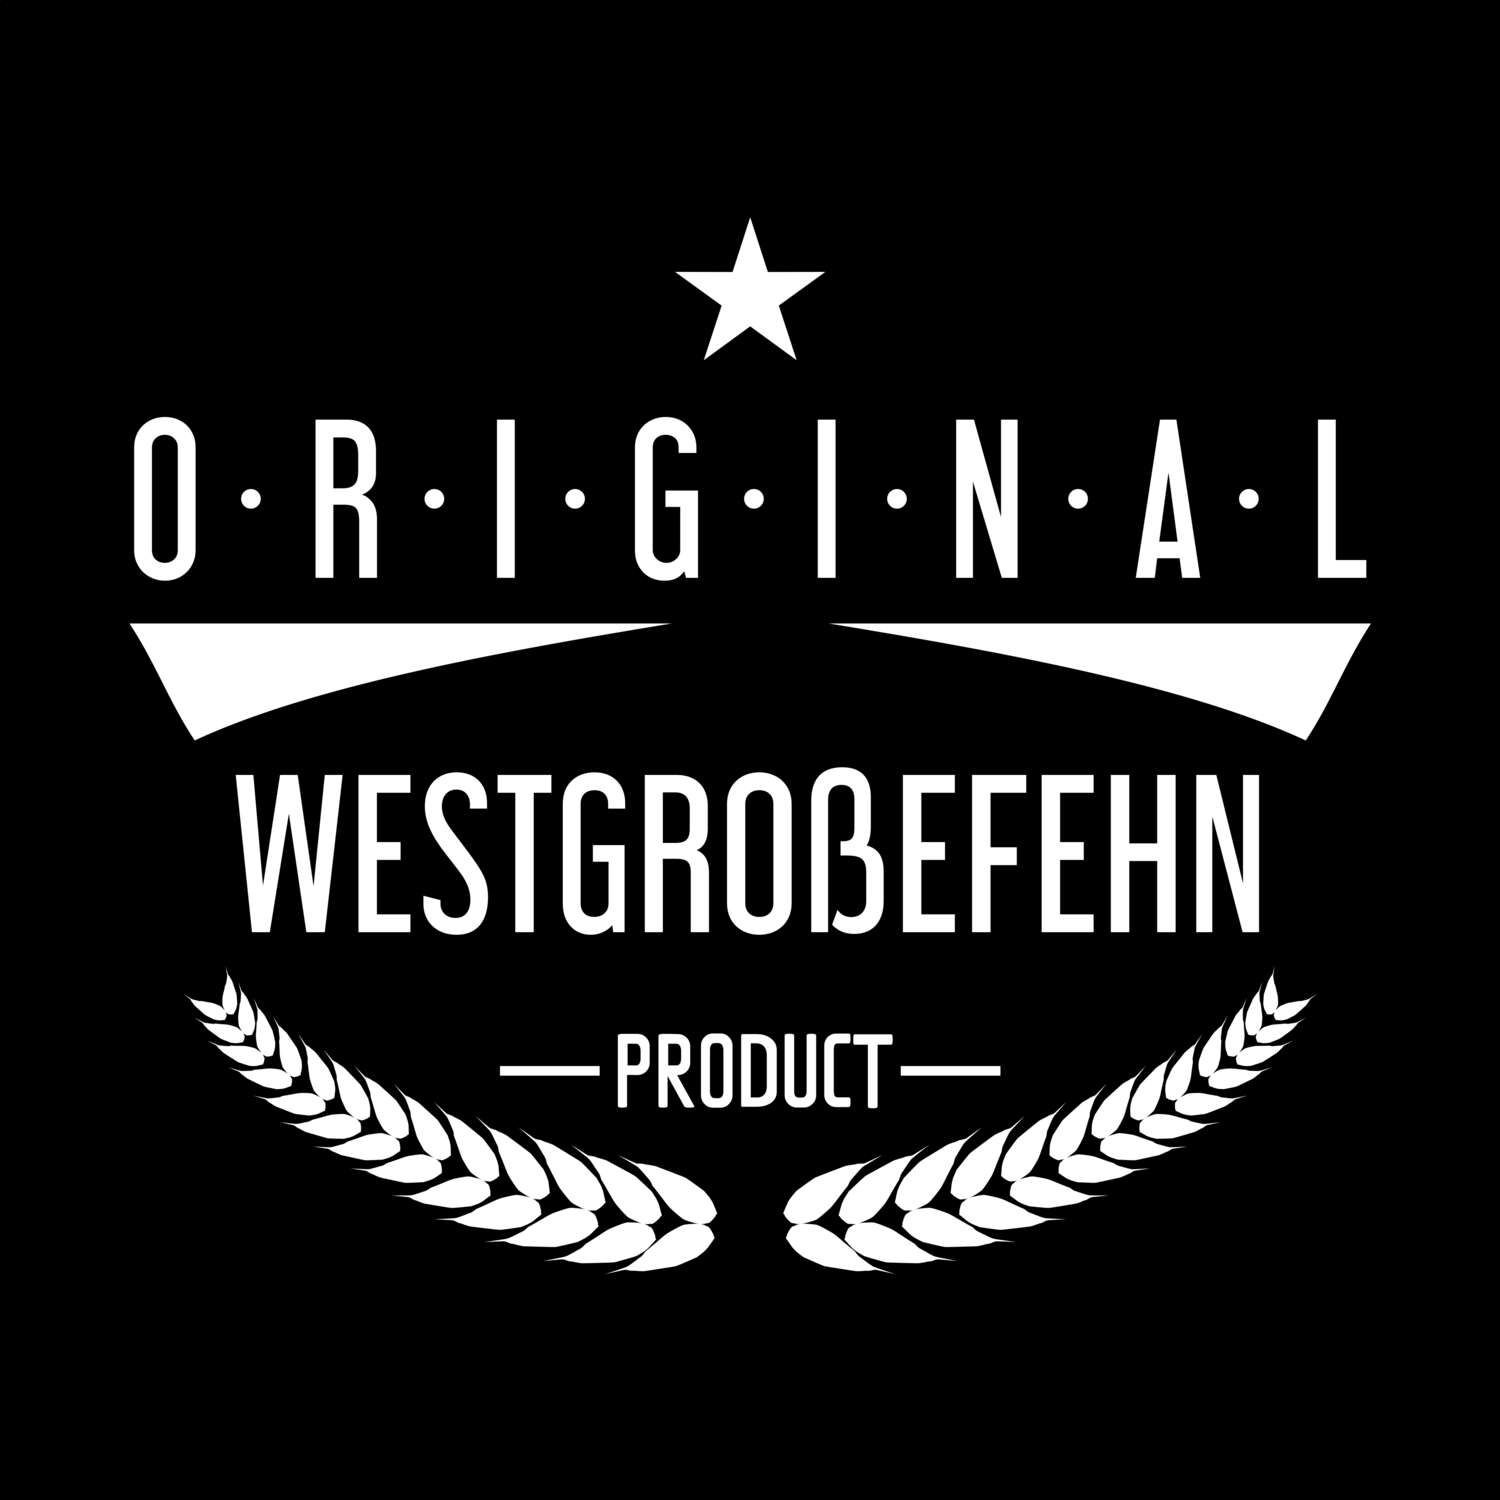 Westgroßefehn T-Shirt »Original Product«